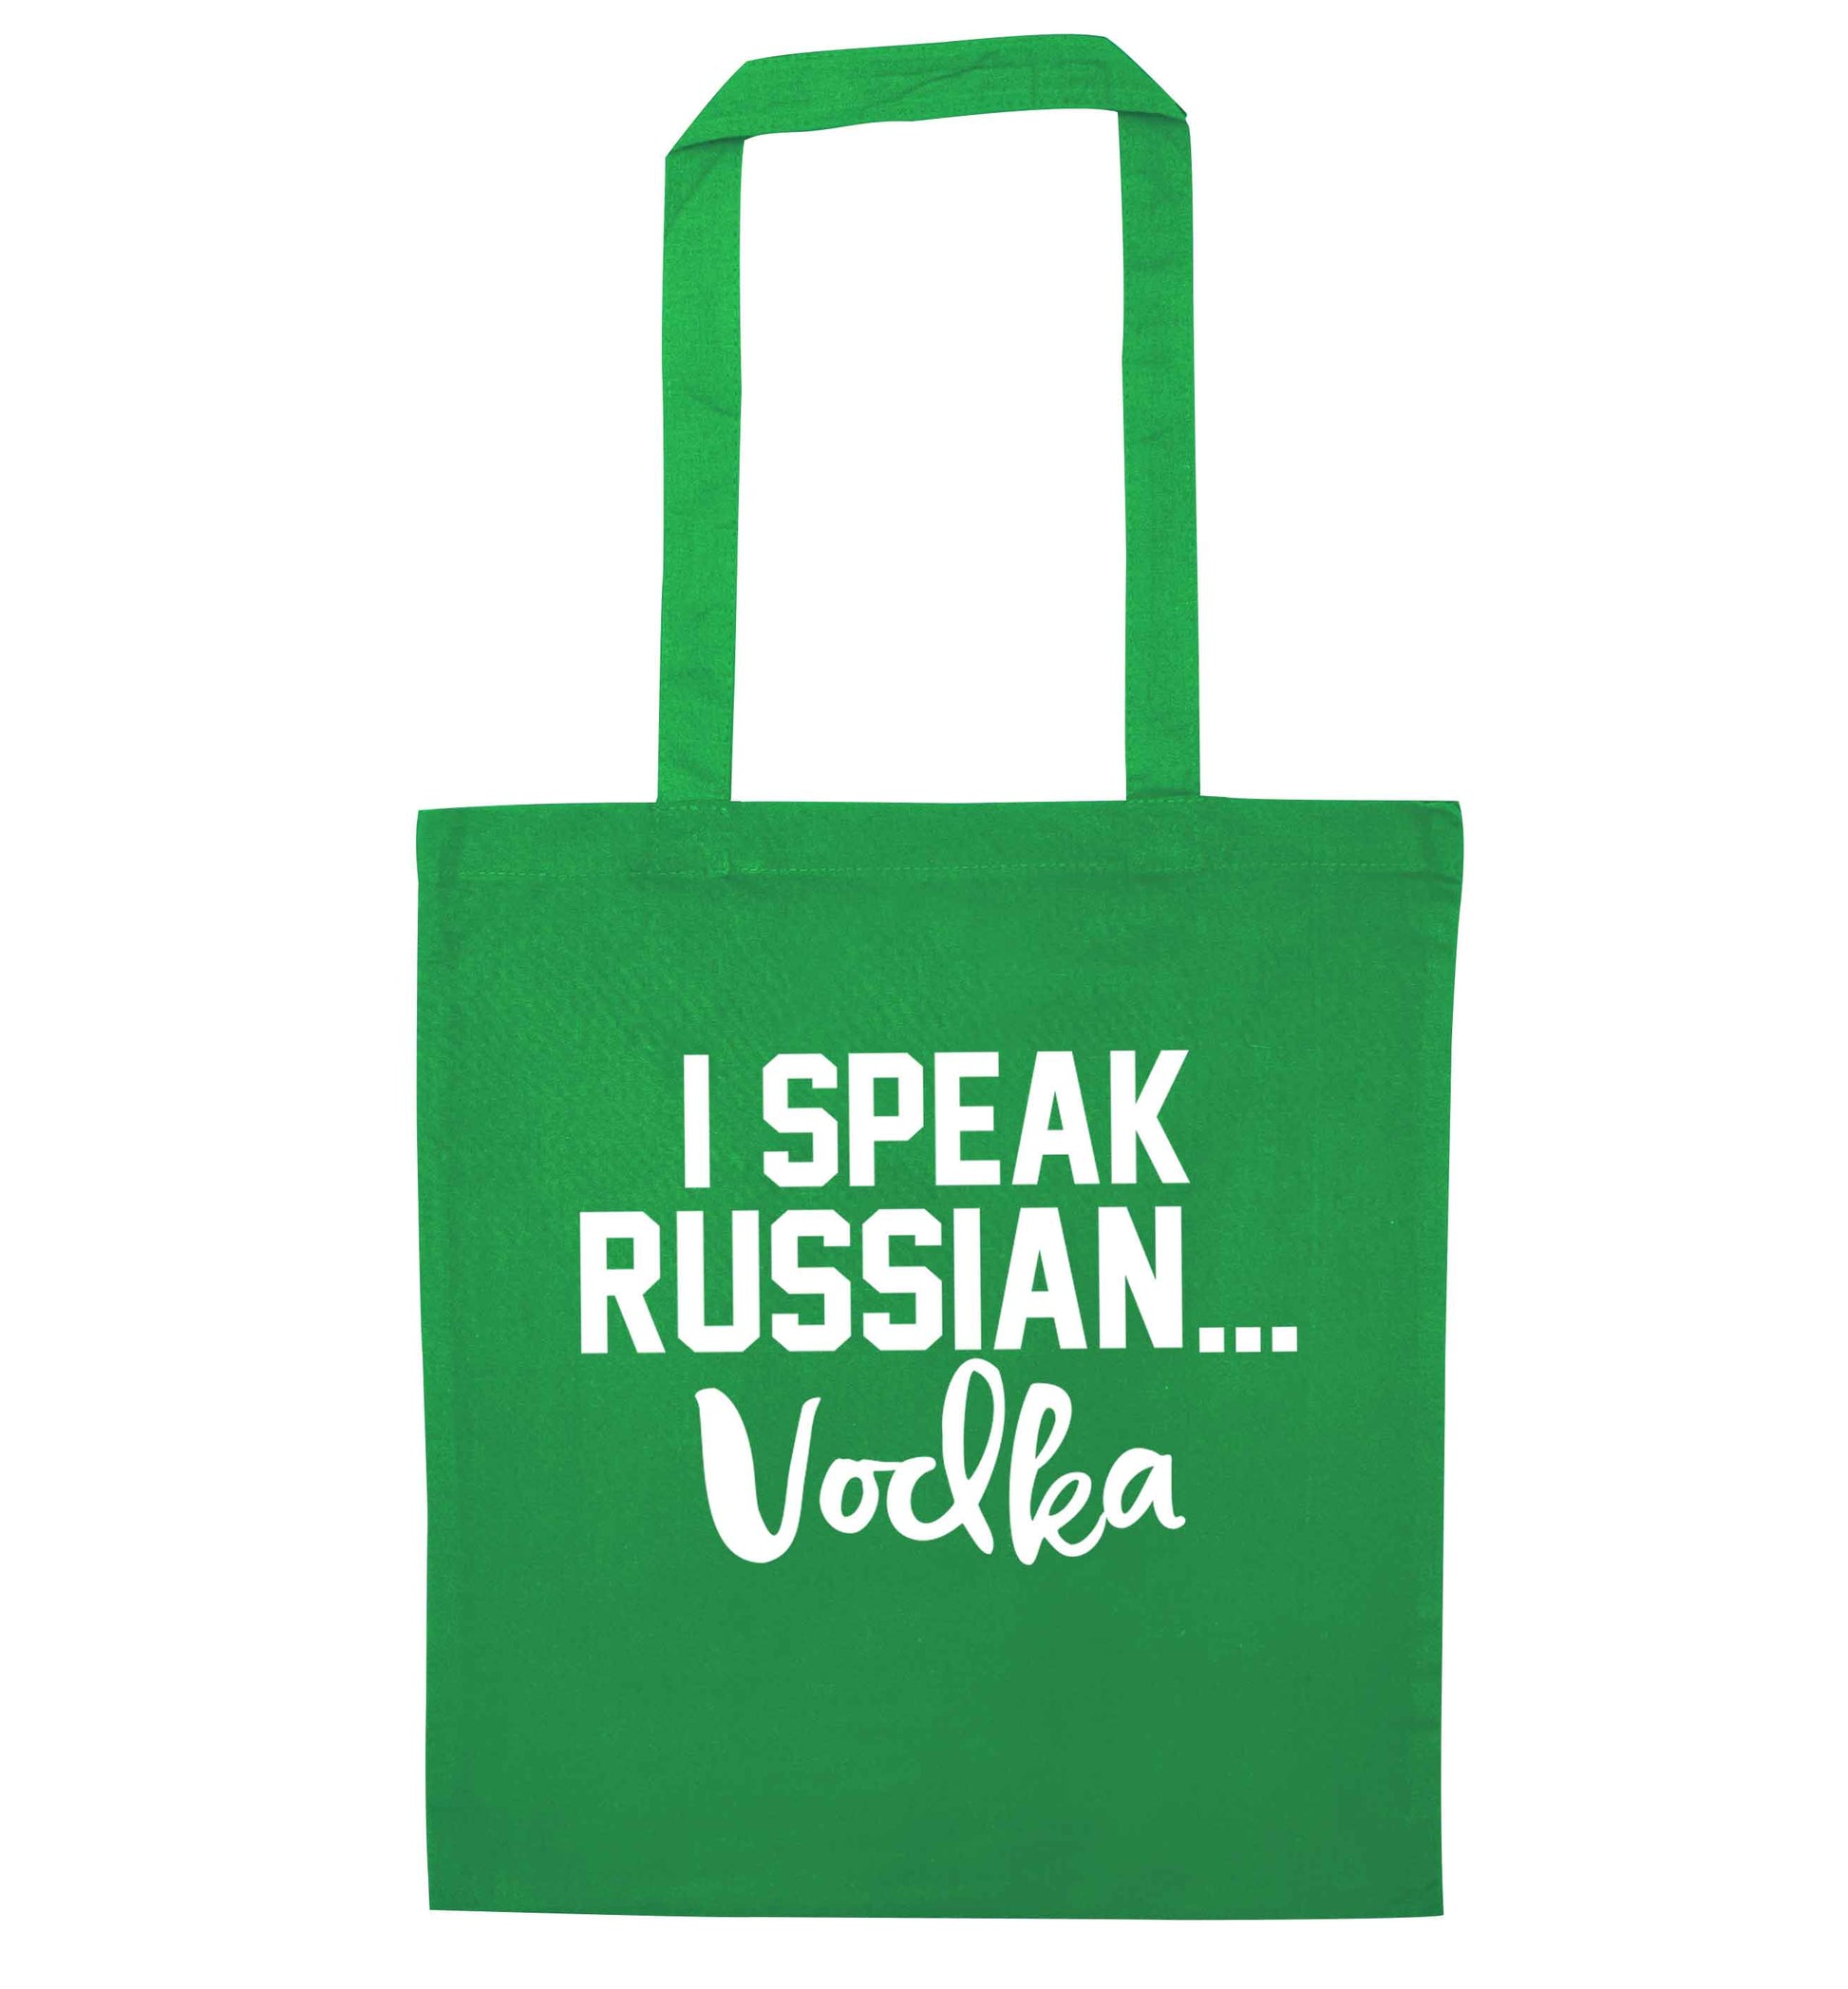 I speak russian...vodka green tote bag